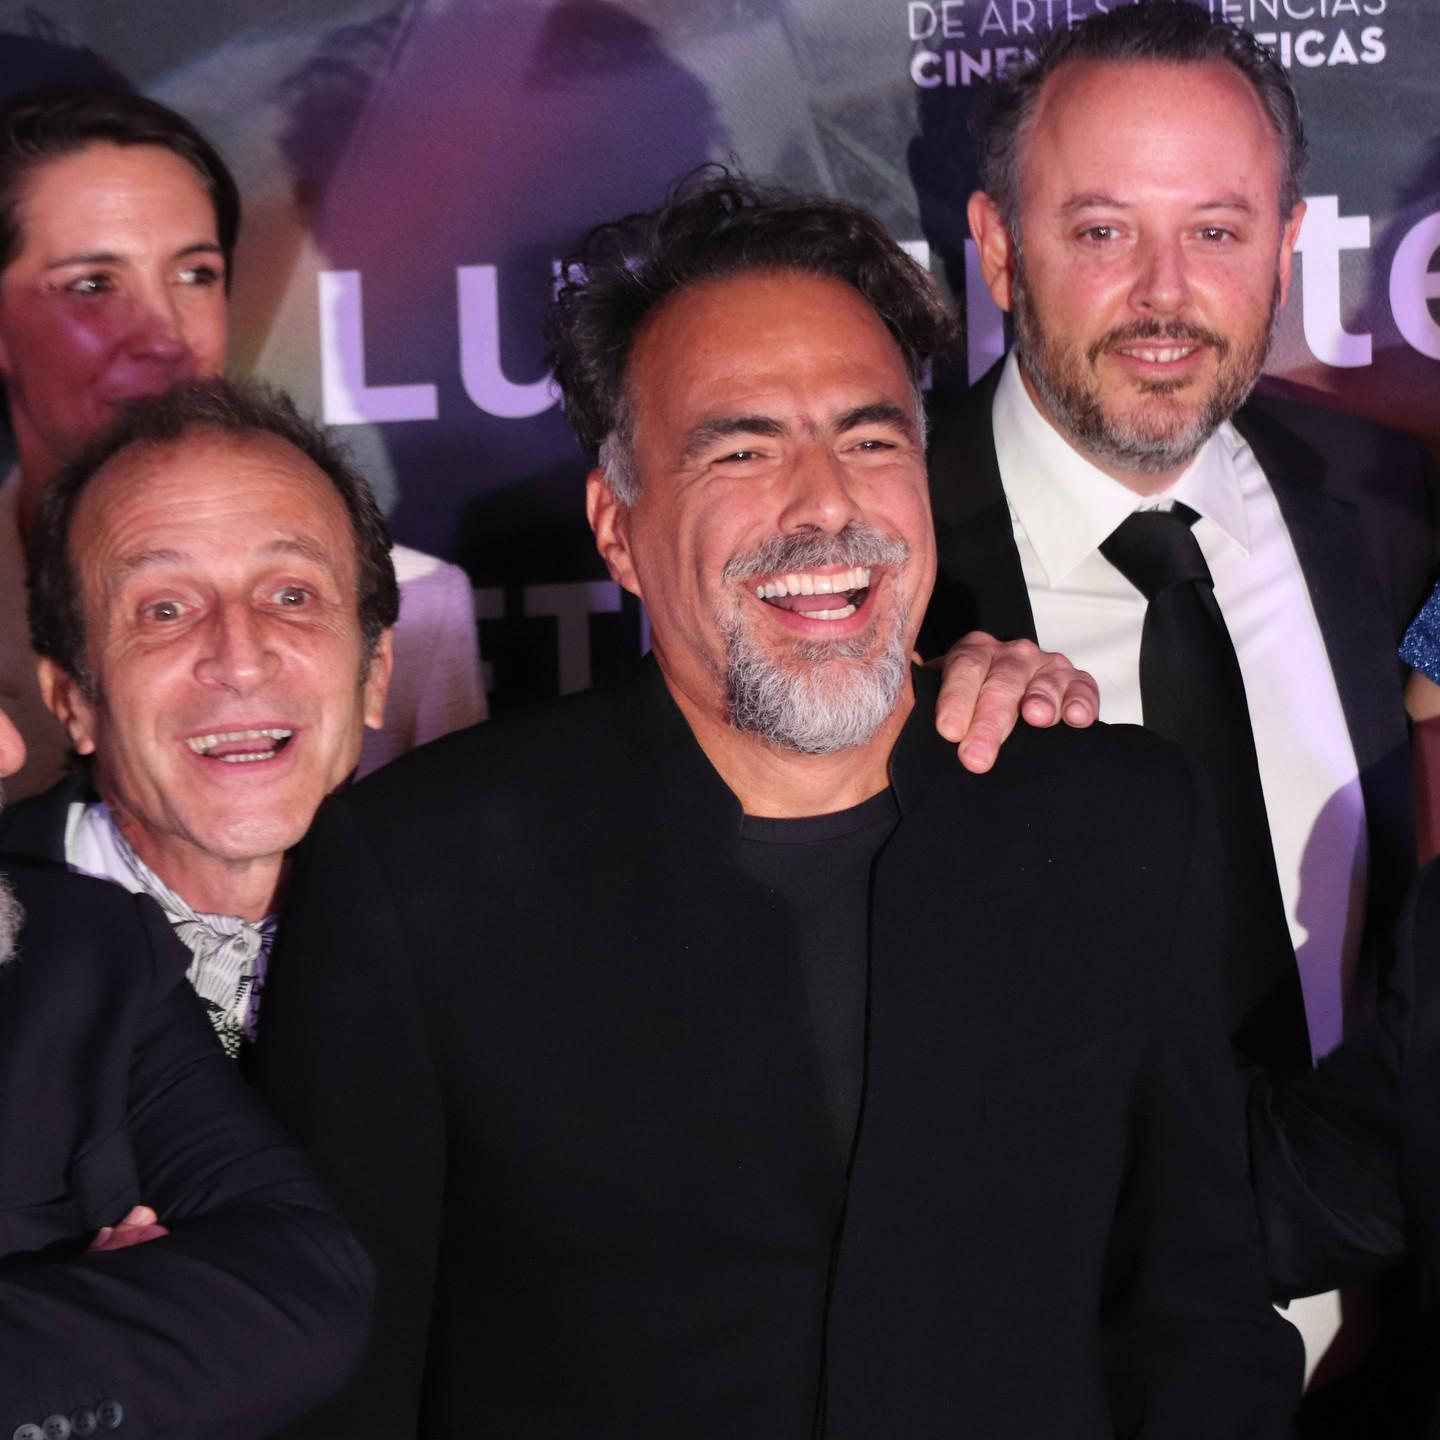 $!‘Bardo’, de Alejandro González Iñárritu, gana 8 premios Ariel